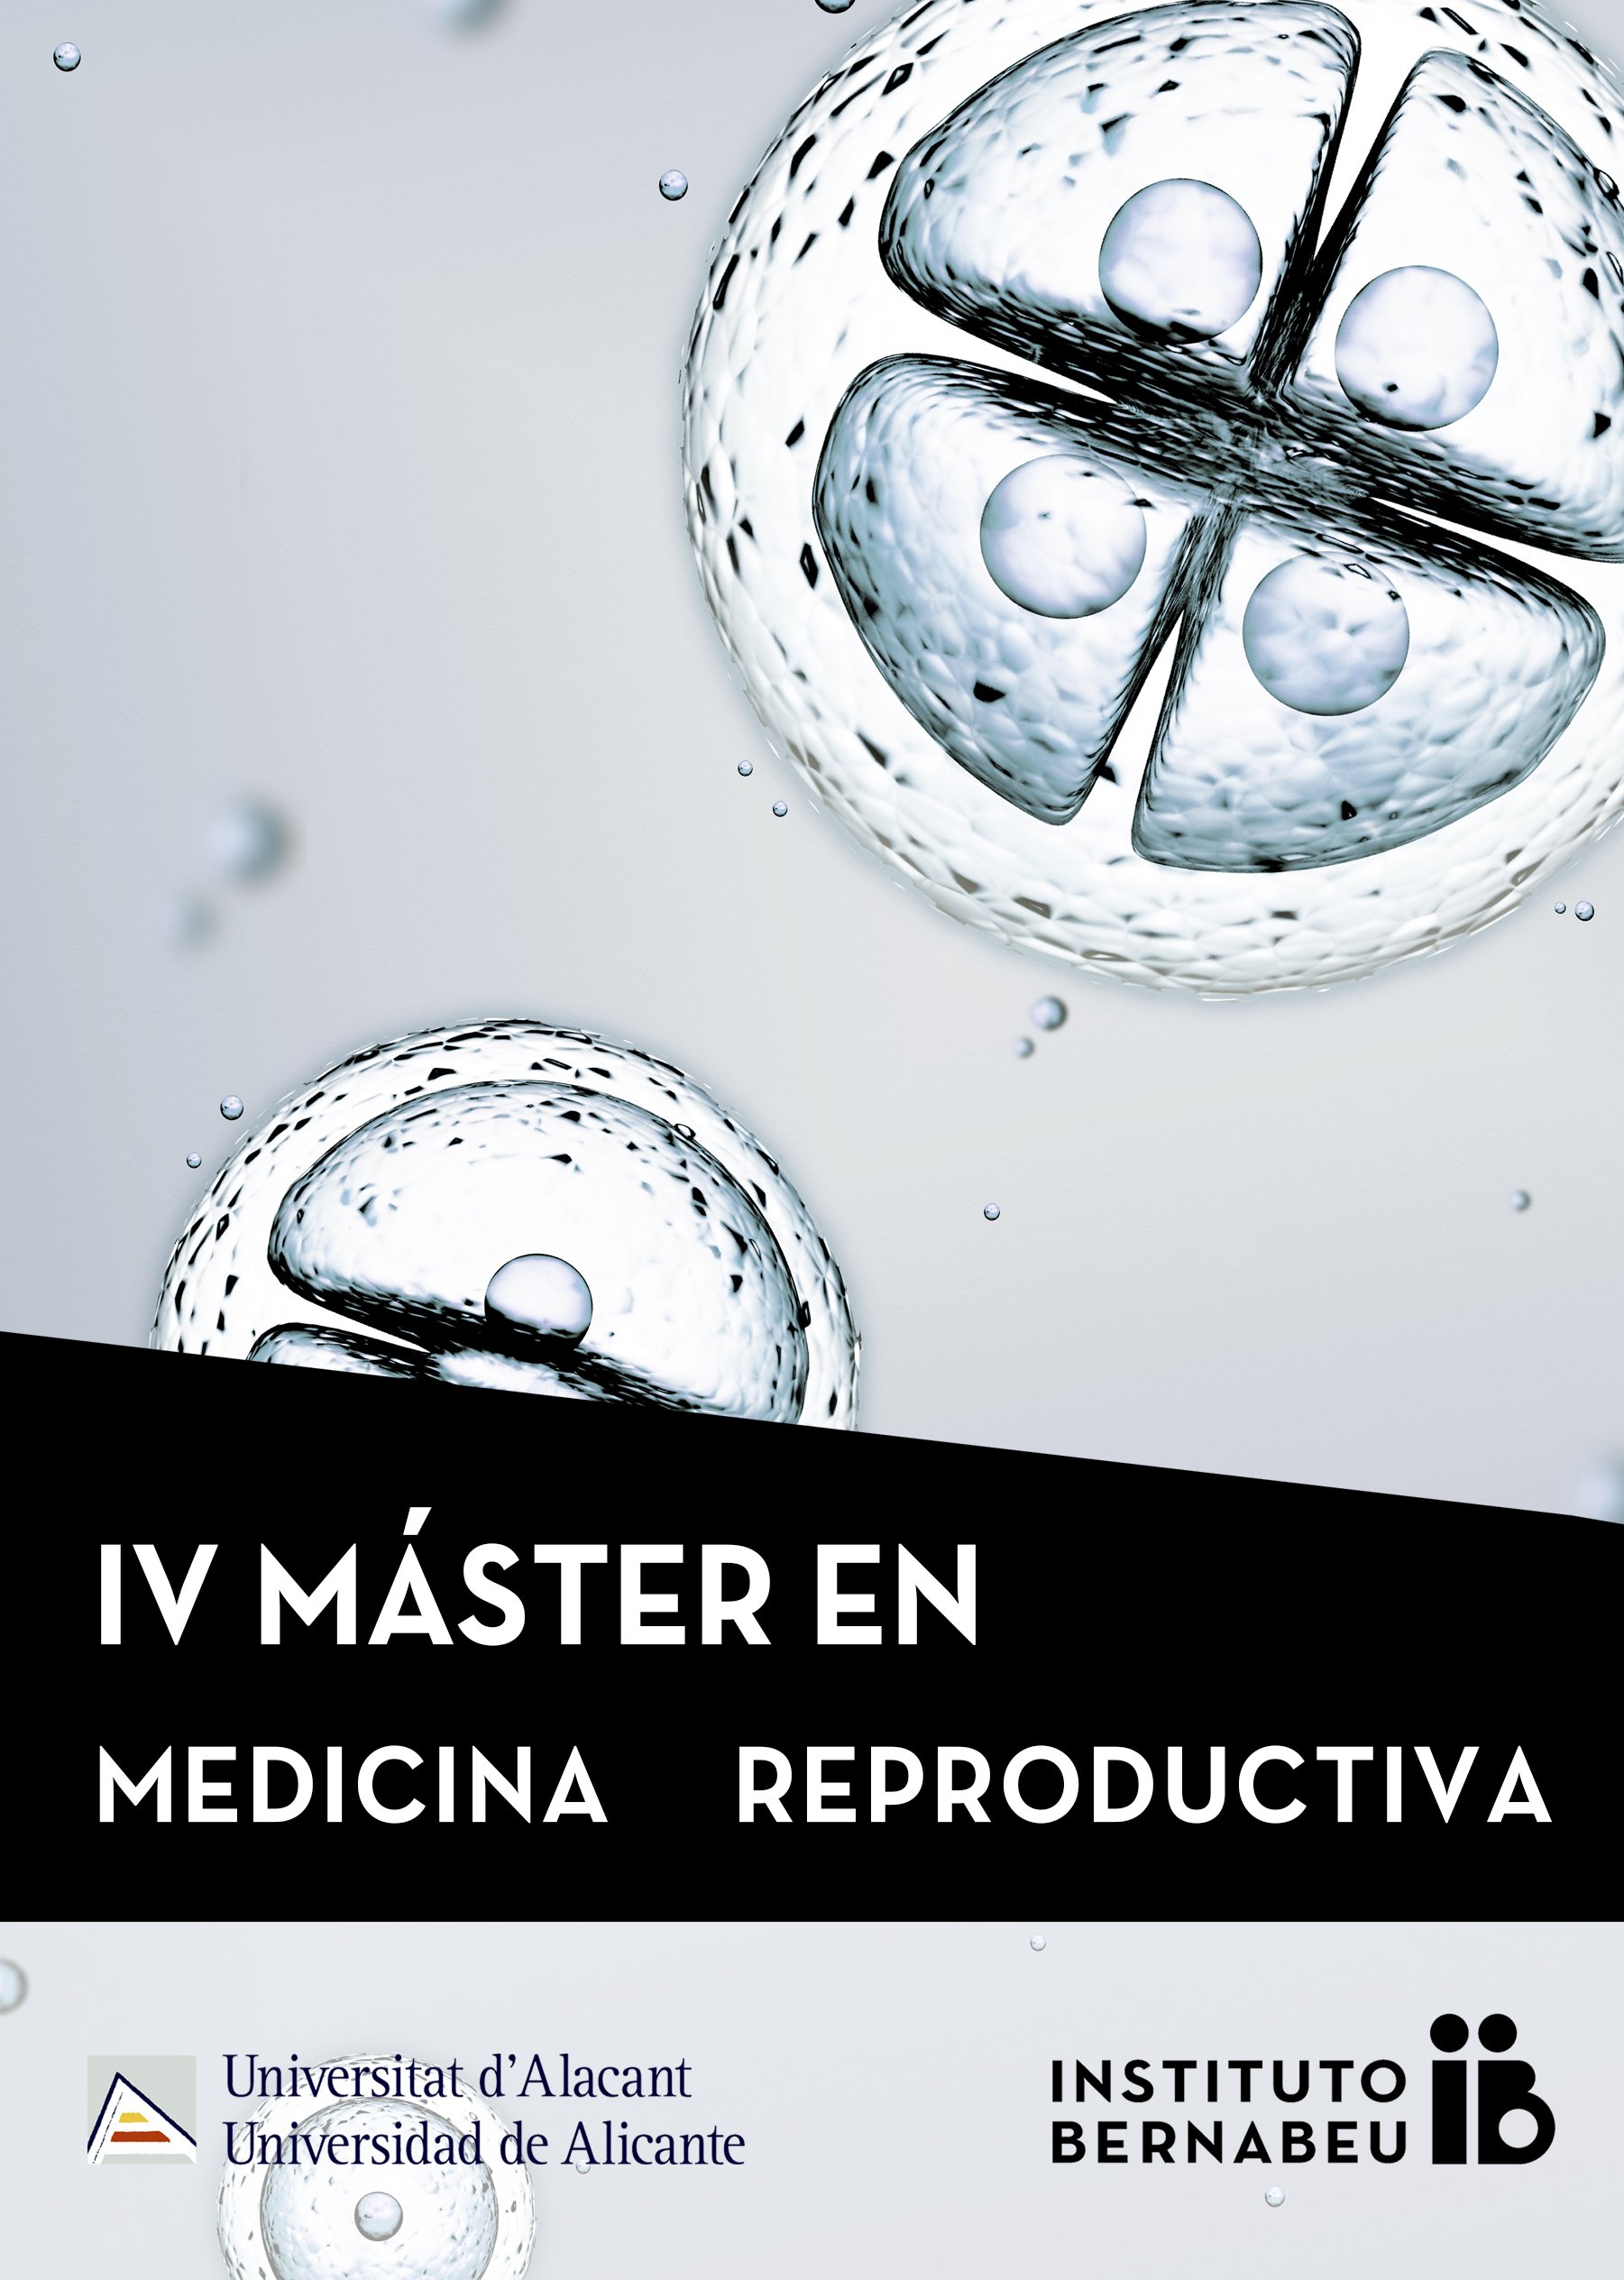 IV Instituto Bernabeu-University of Alicante Master’s Degree in Reproductive Medicine